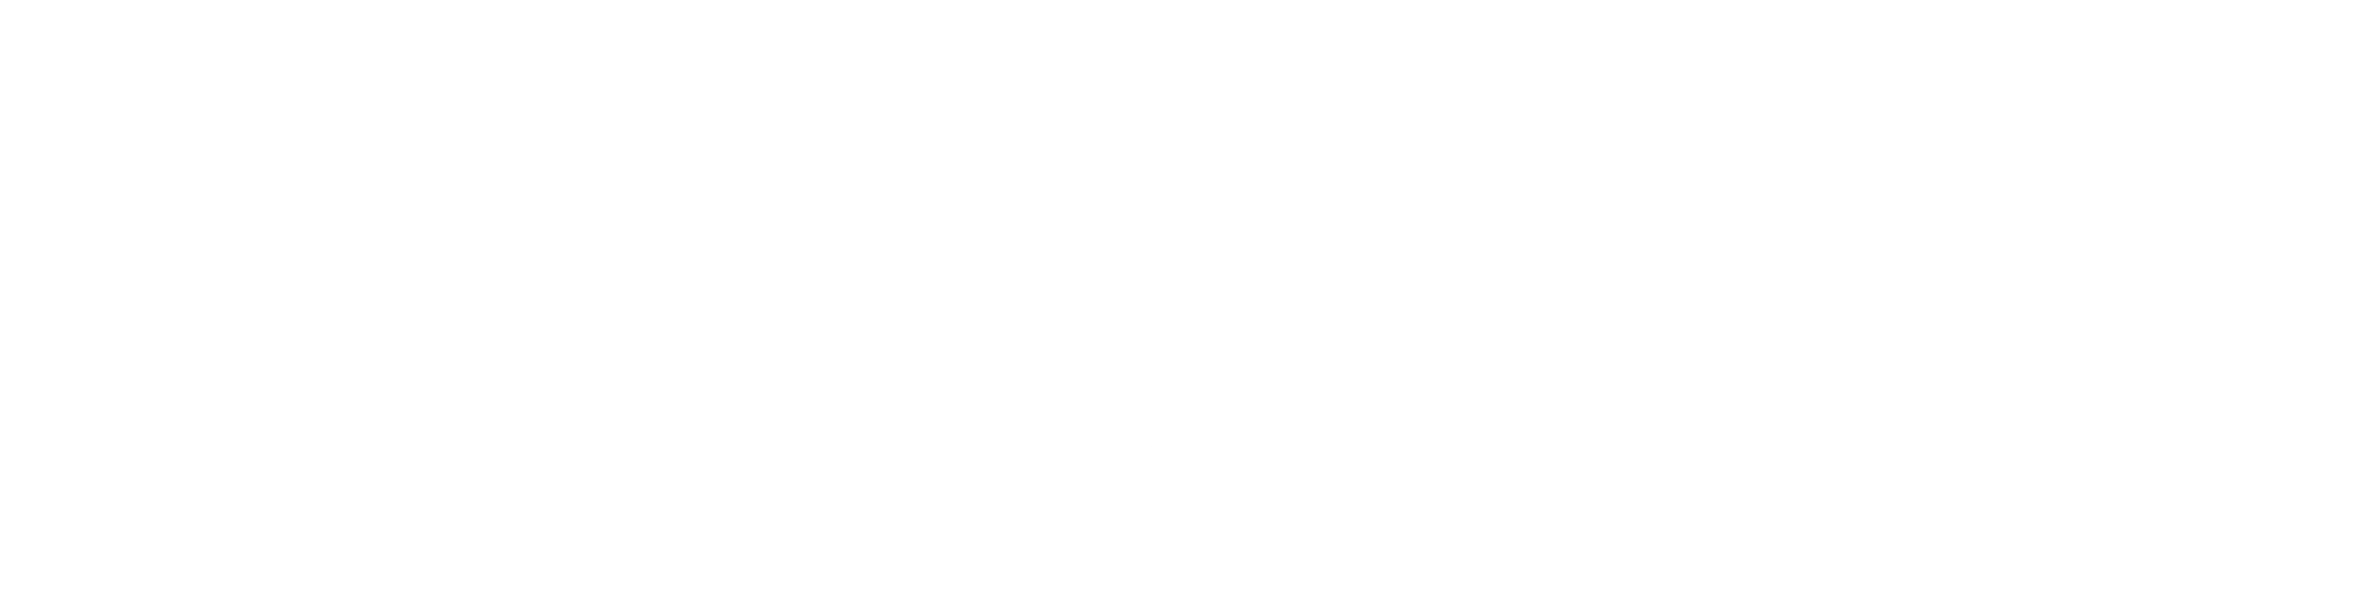 Beatrice: Rhythm Game Notechart Editor